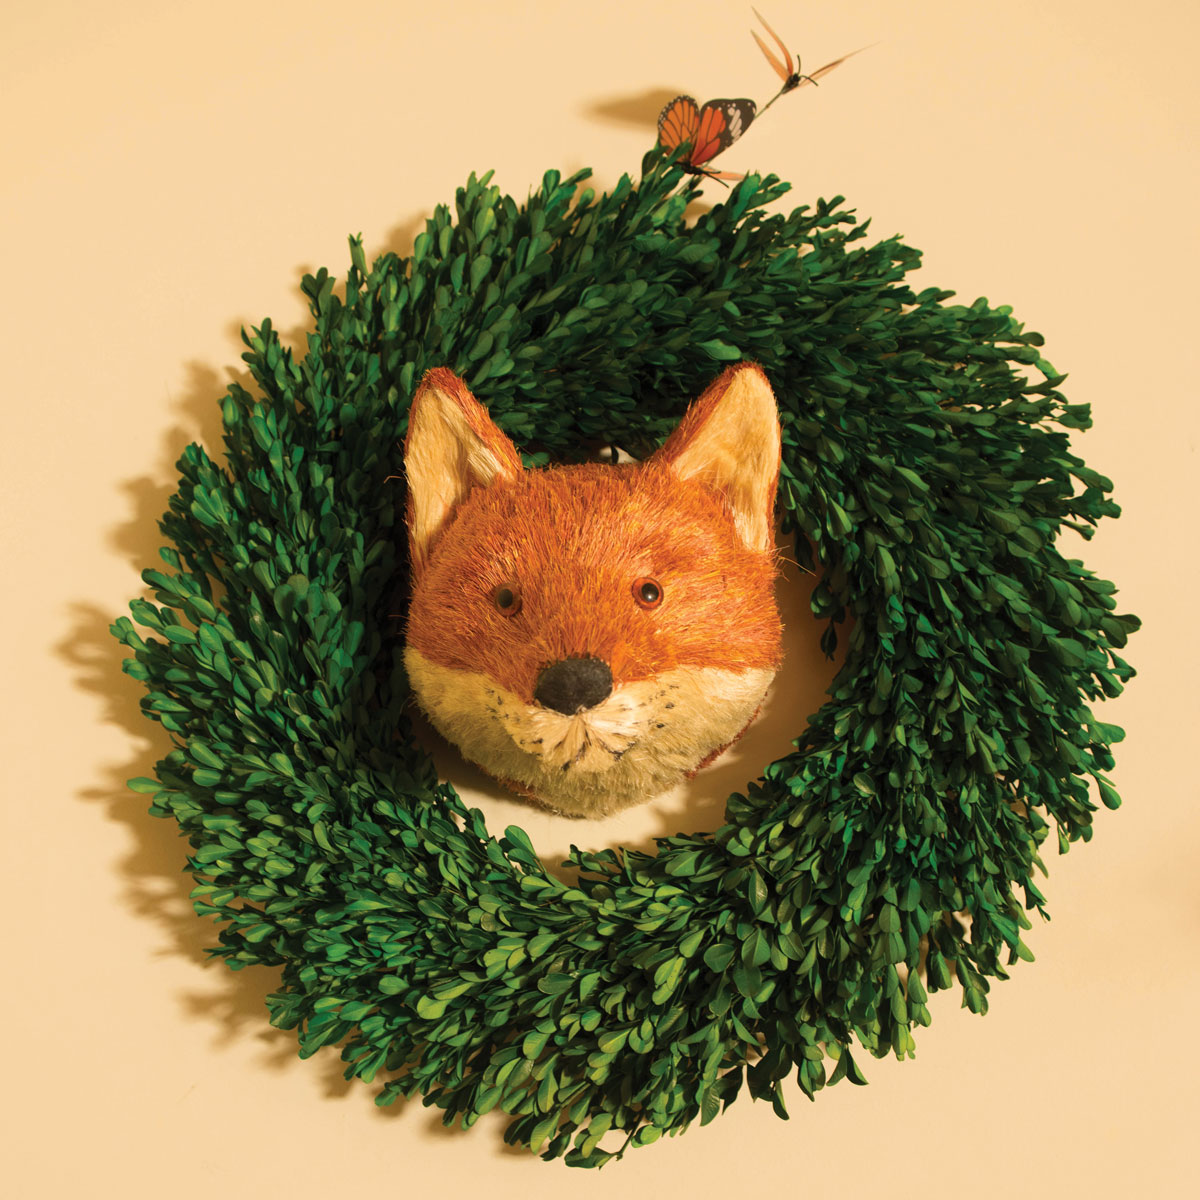 DIY Jingle Bell Burlap Garland & Winter Wonderland Christmas Mantel - Kim  Byers